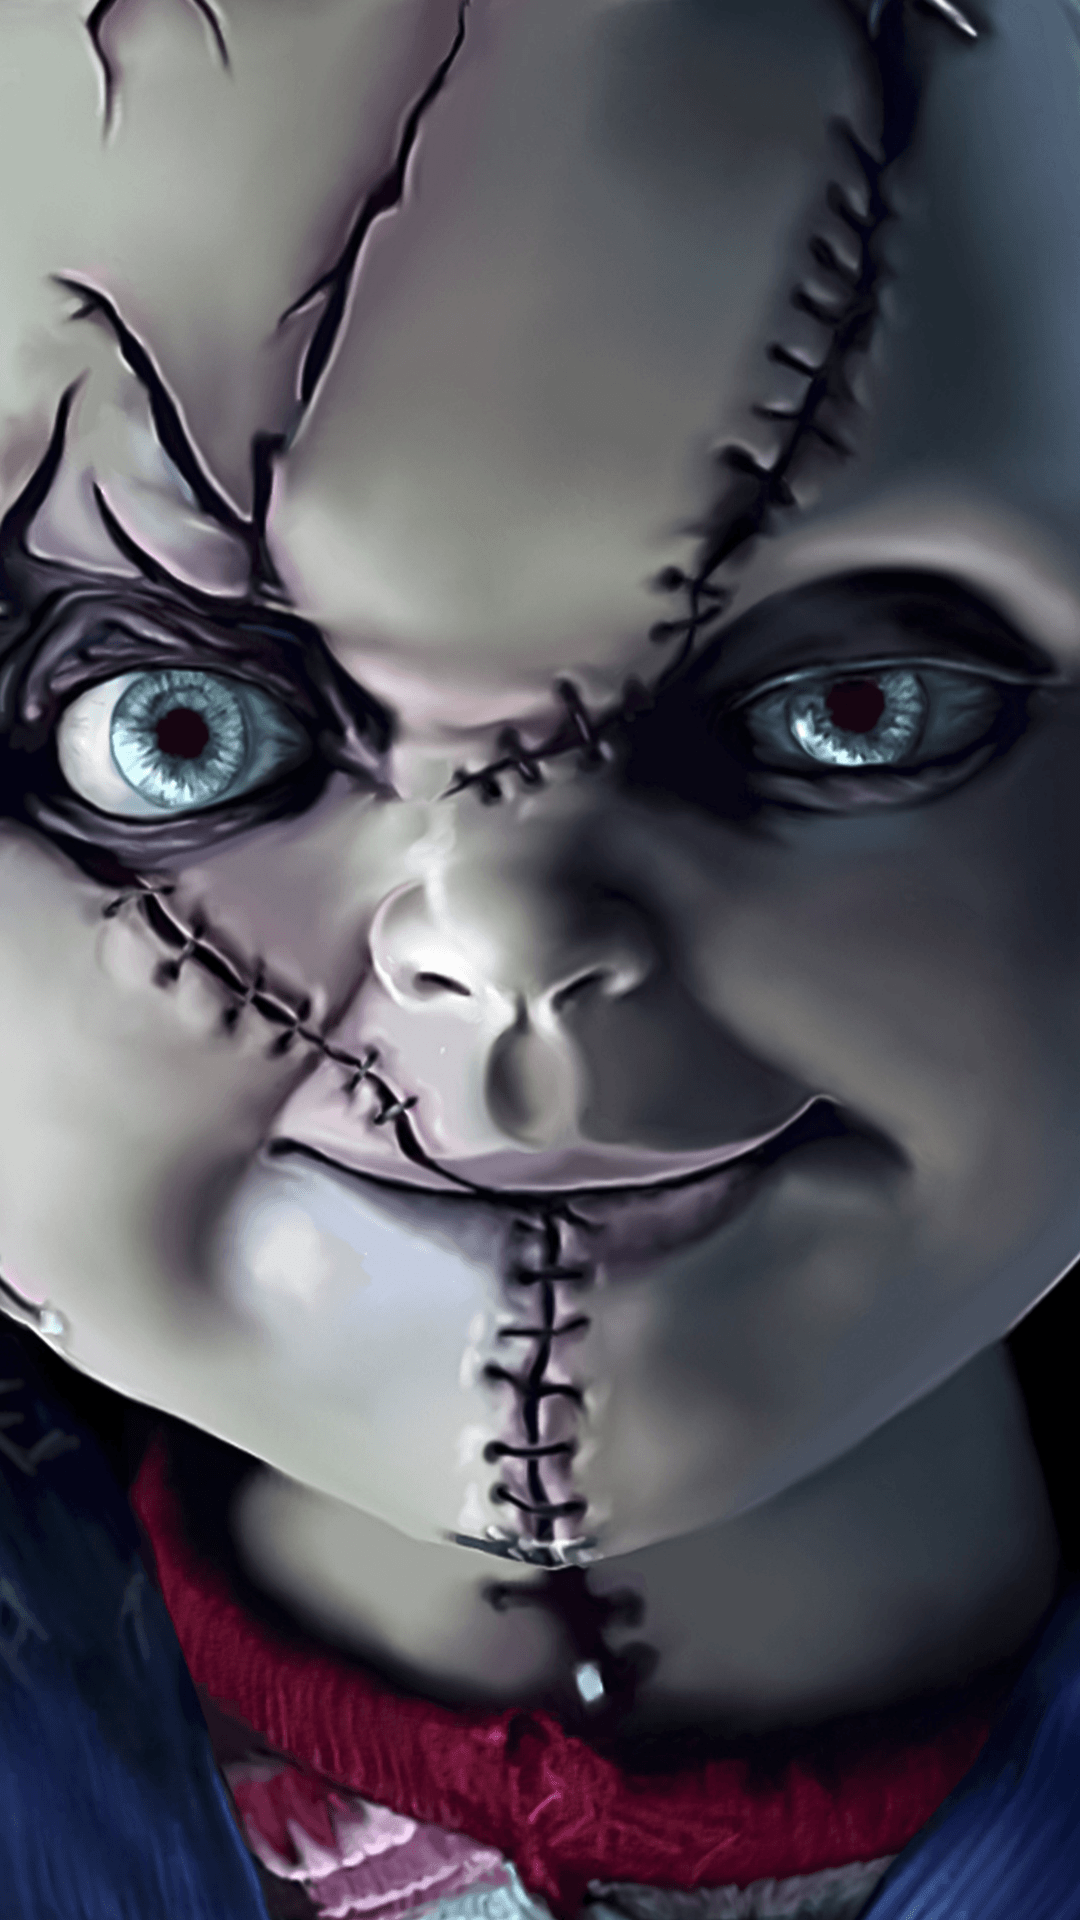 Chucky #doll #scary #nope #halloween #horrormovies. Demons